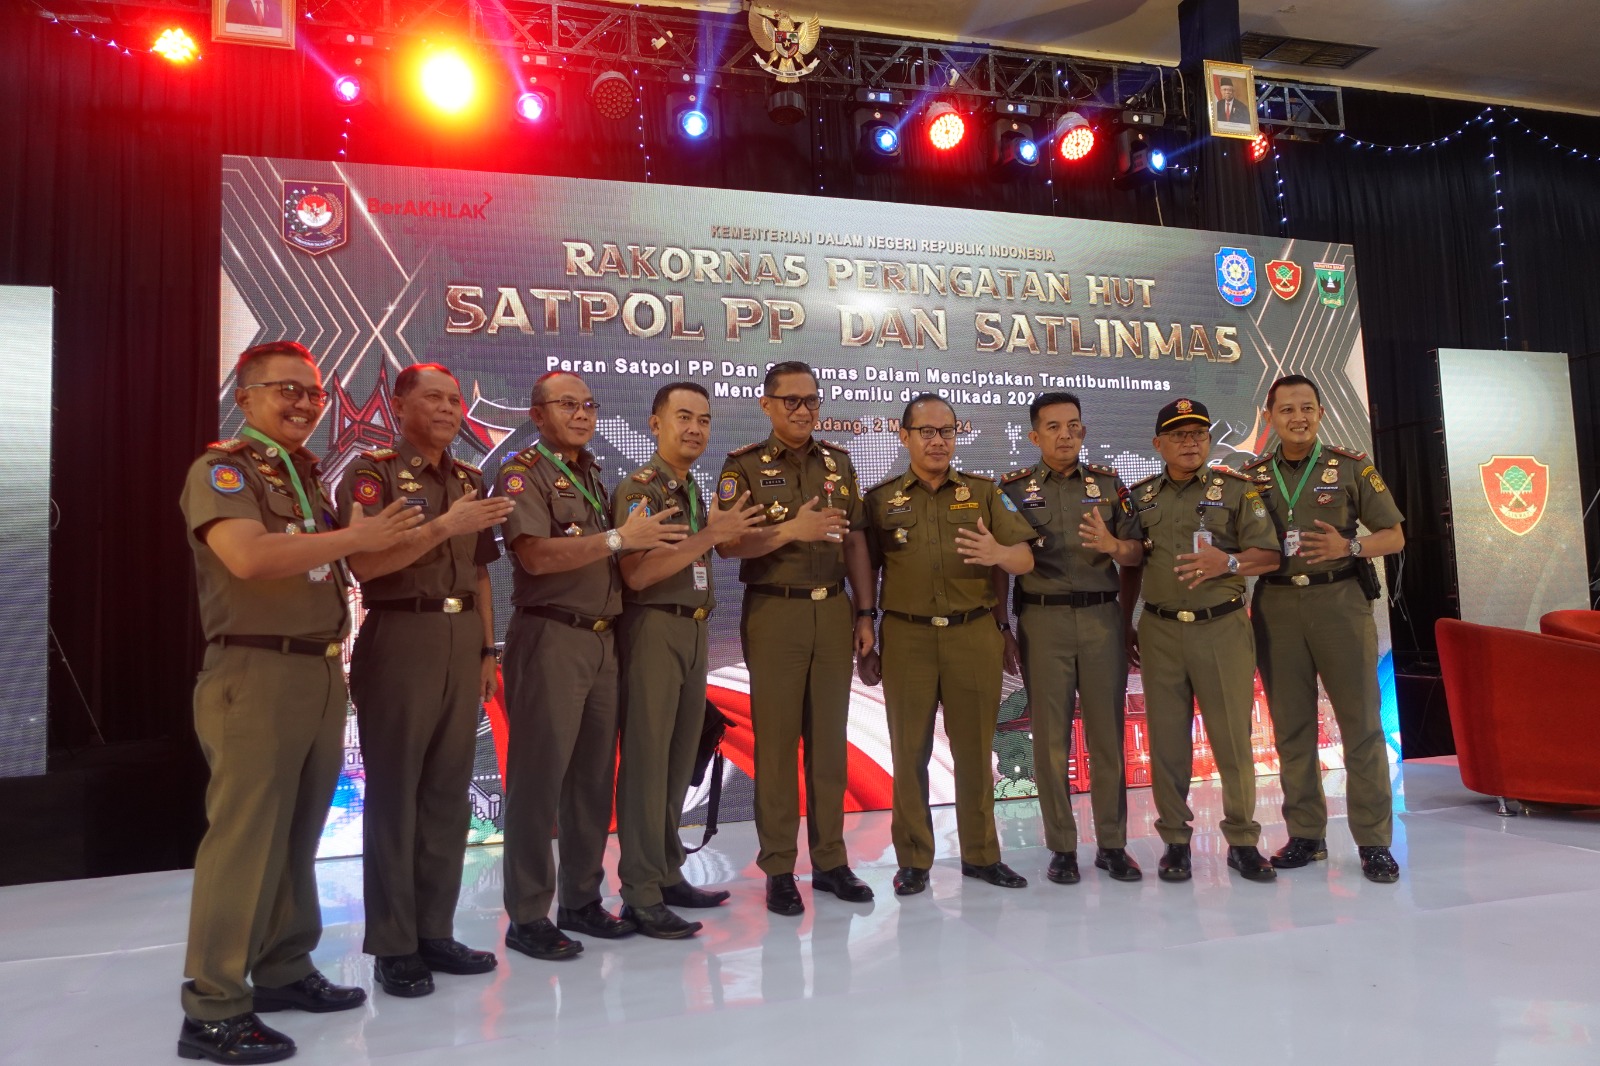 Rapat Koordinasi Nasional (Rakornas) Dalam Rangka HUT Satpol PP ke-74 dan Satlinmas ke-62 Tingkat Nasional di Padang, Sumatera Barat.